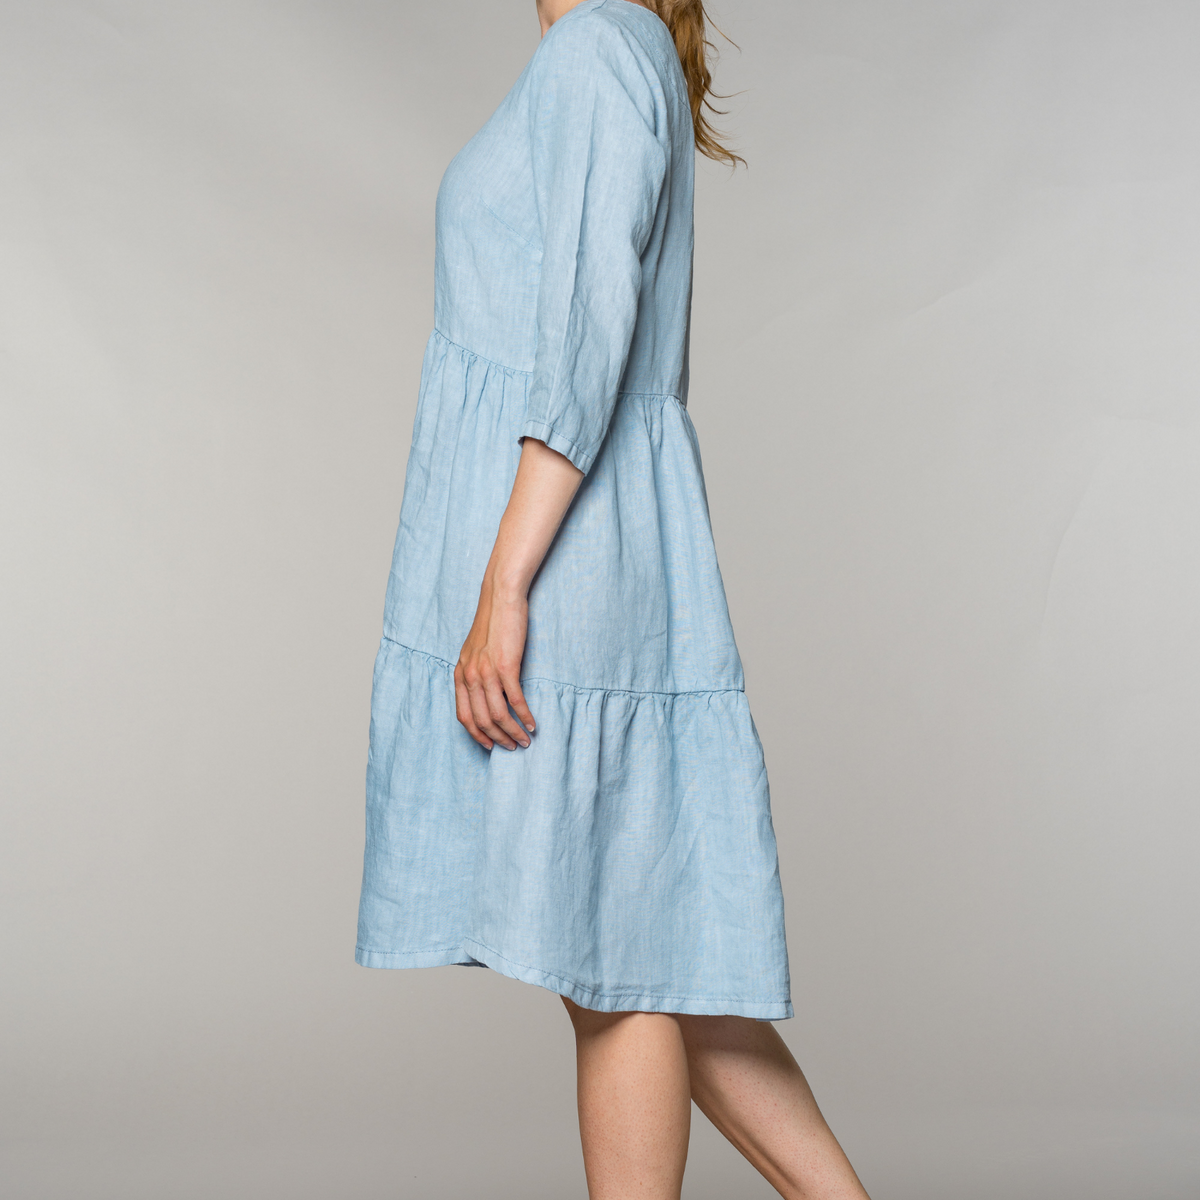 fv-Karo:lina | Midi Dress | Pure Linen I feuervogl